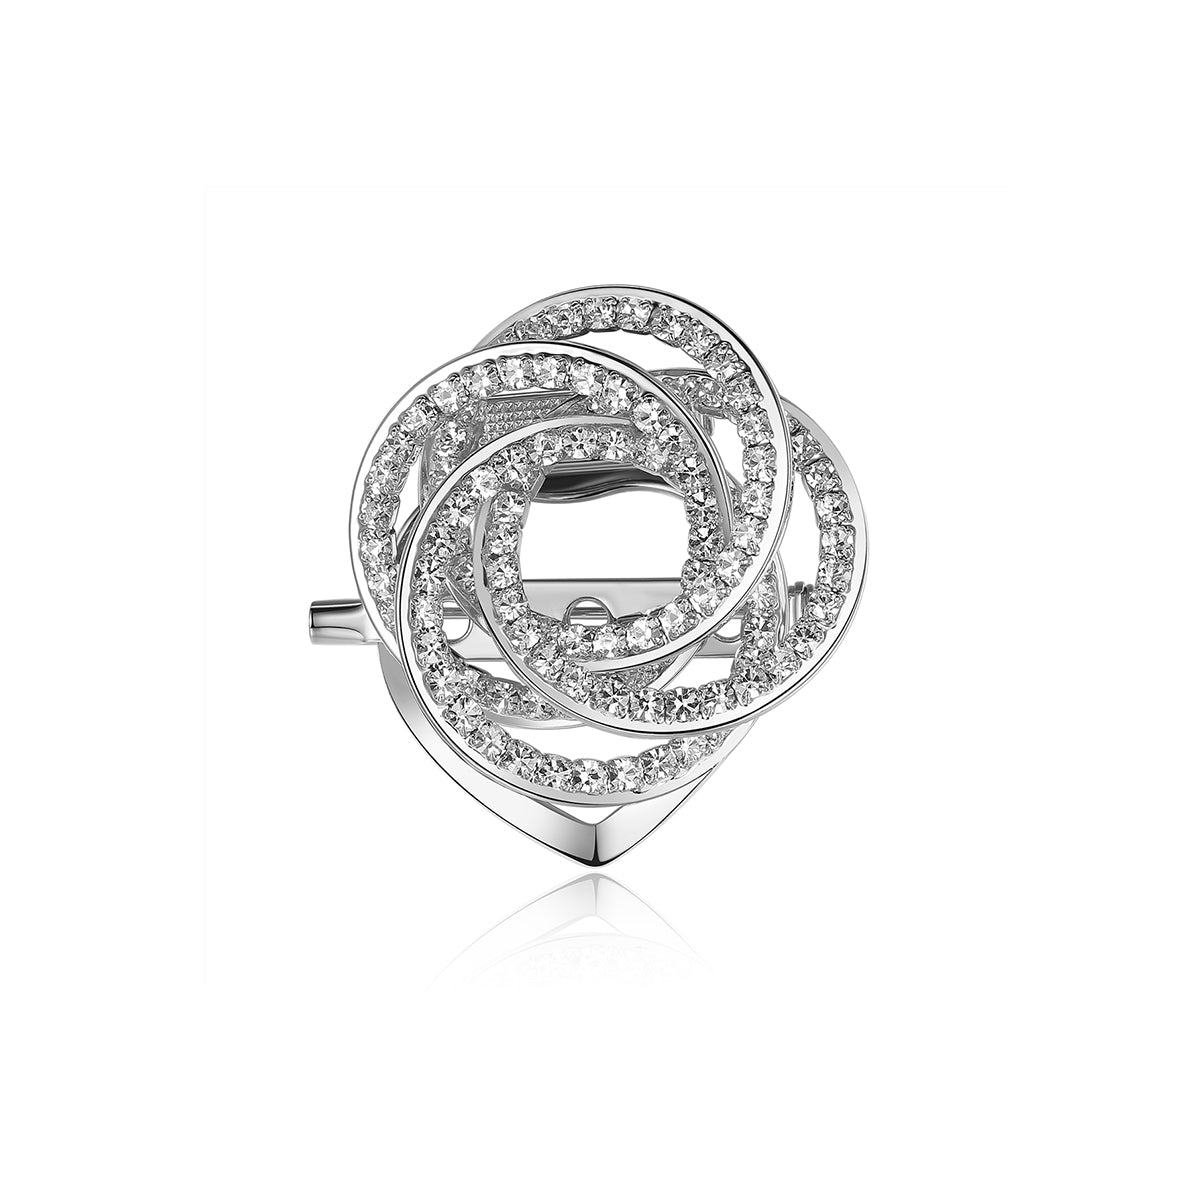 Crystal Camellia Silver Brooch - 0cm